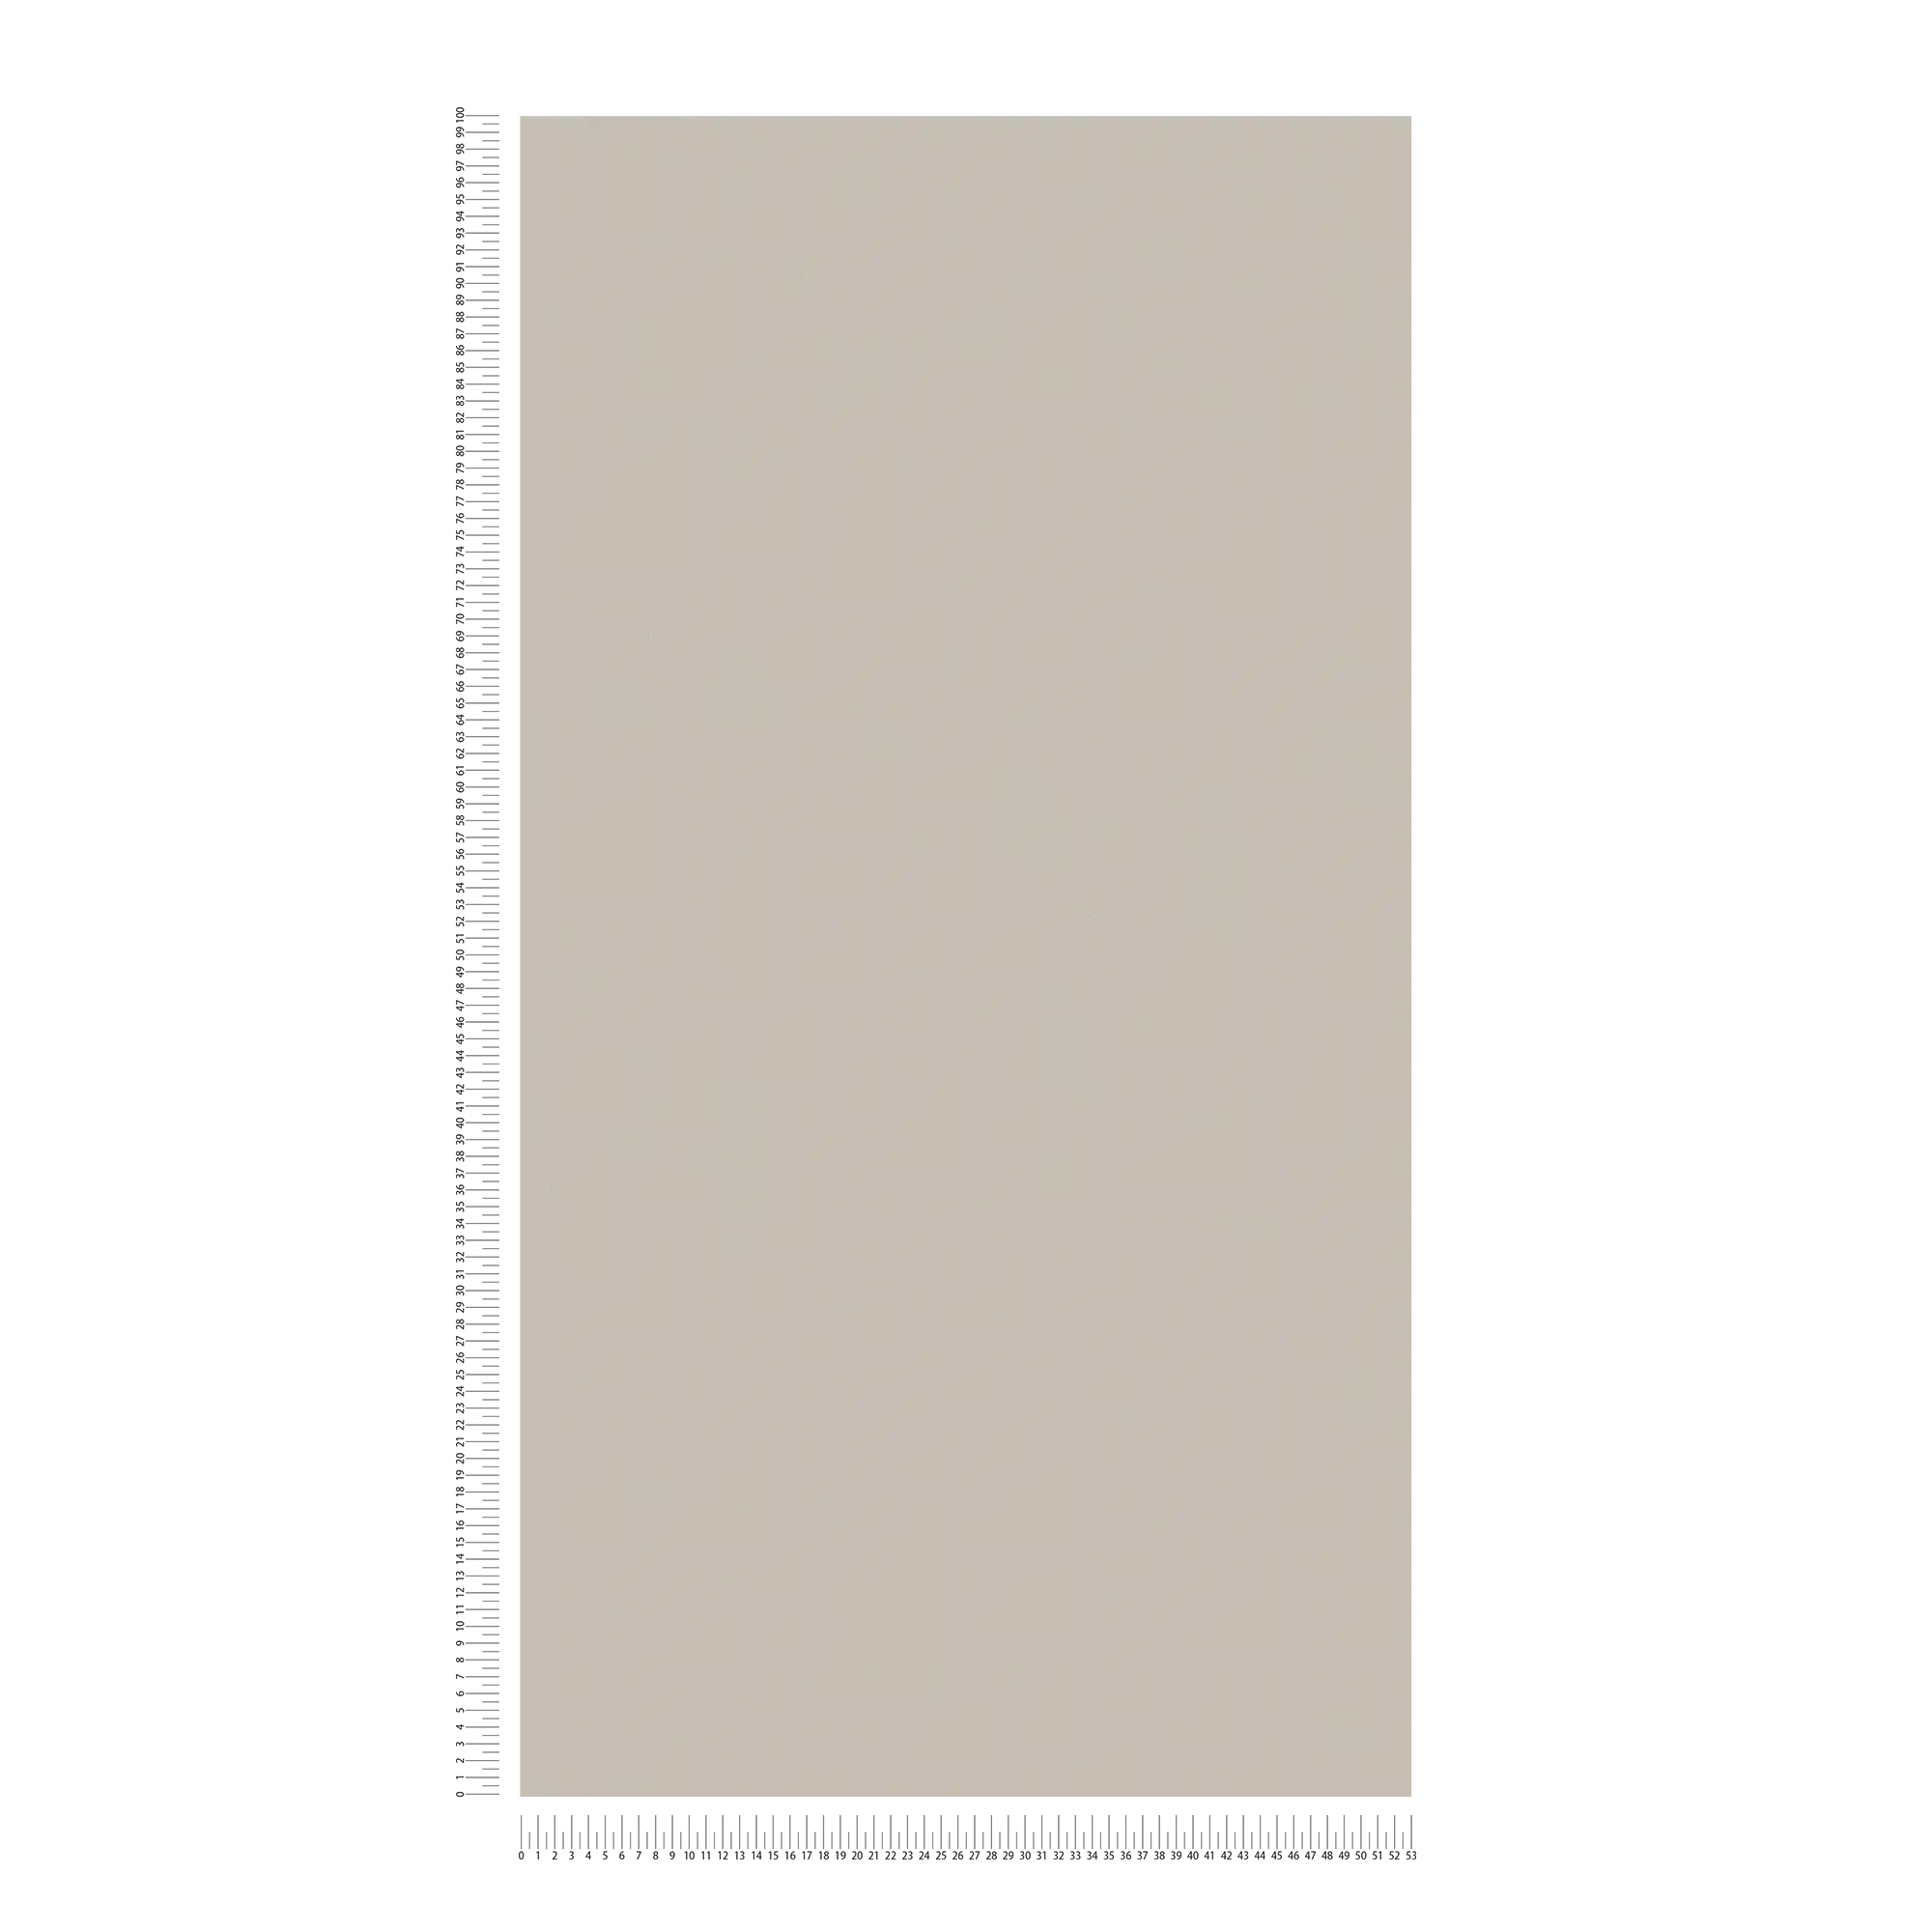             Papel pintado de color cálido, estructurado - marrón, gris
        